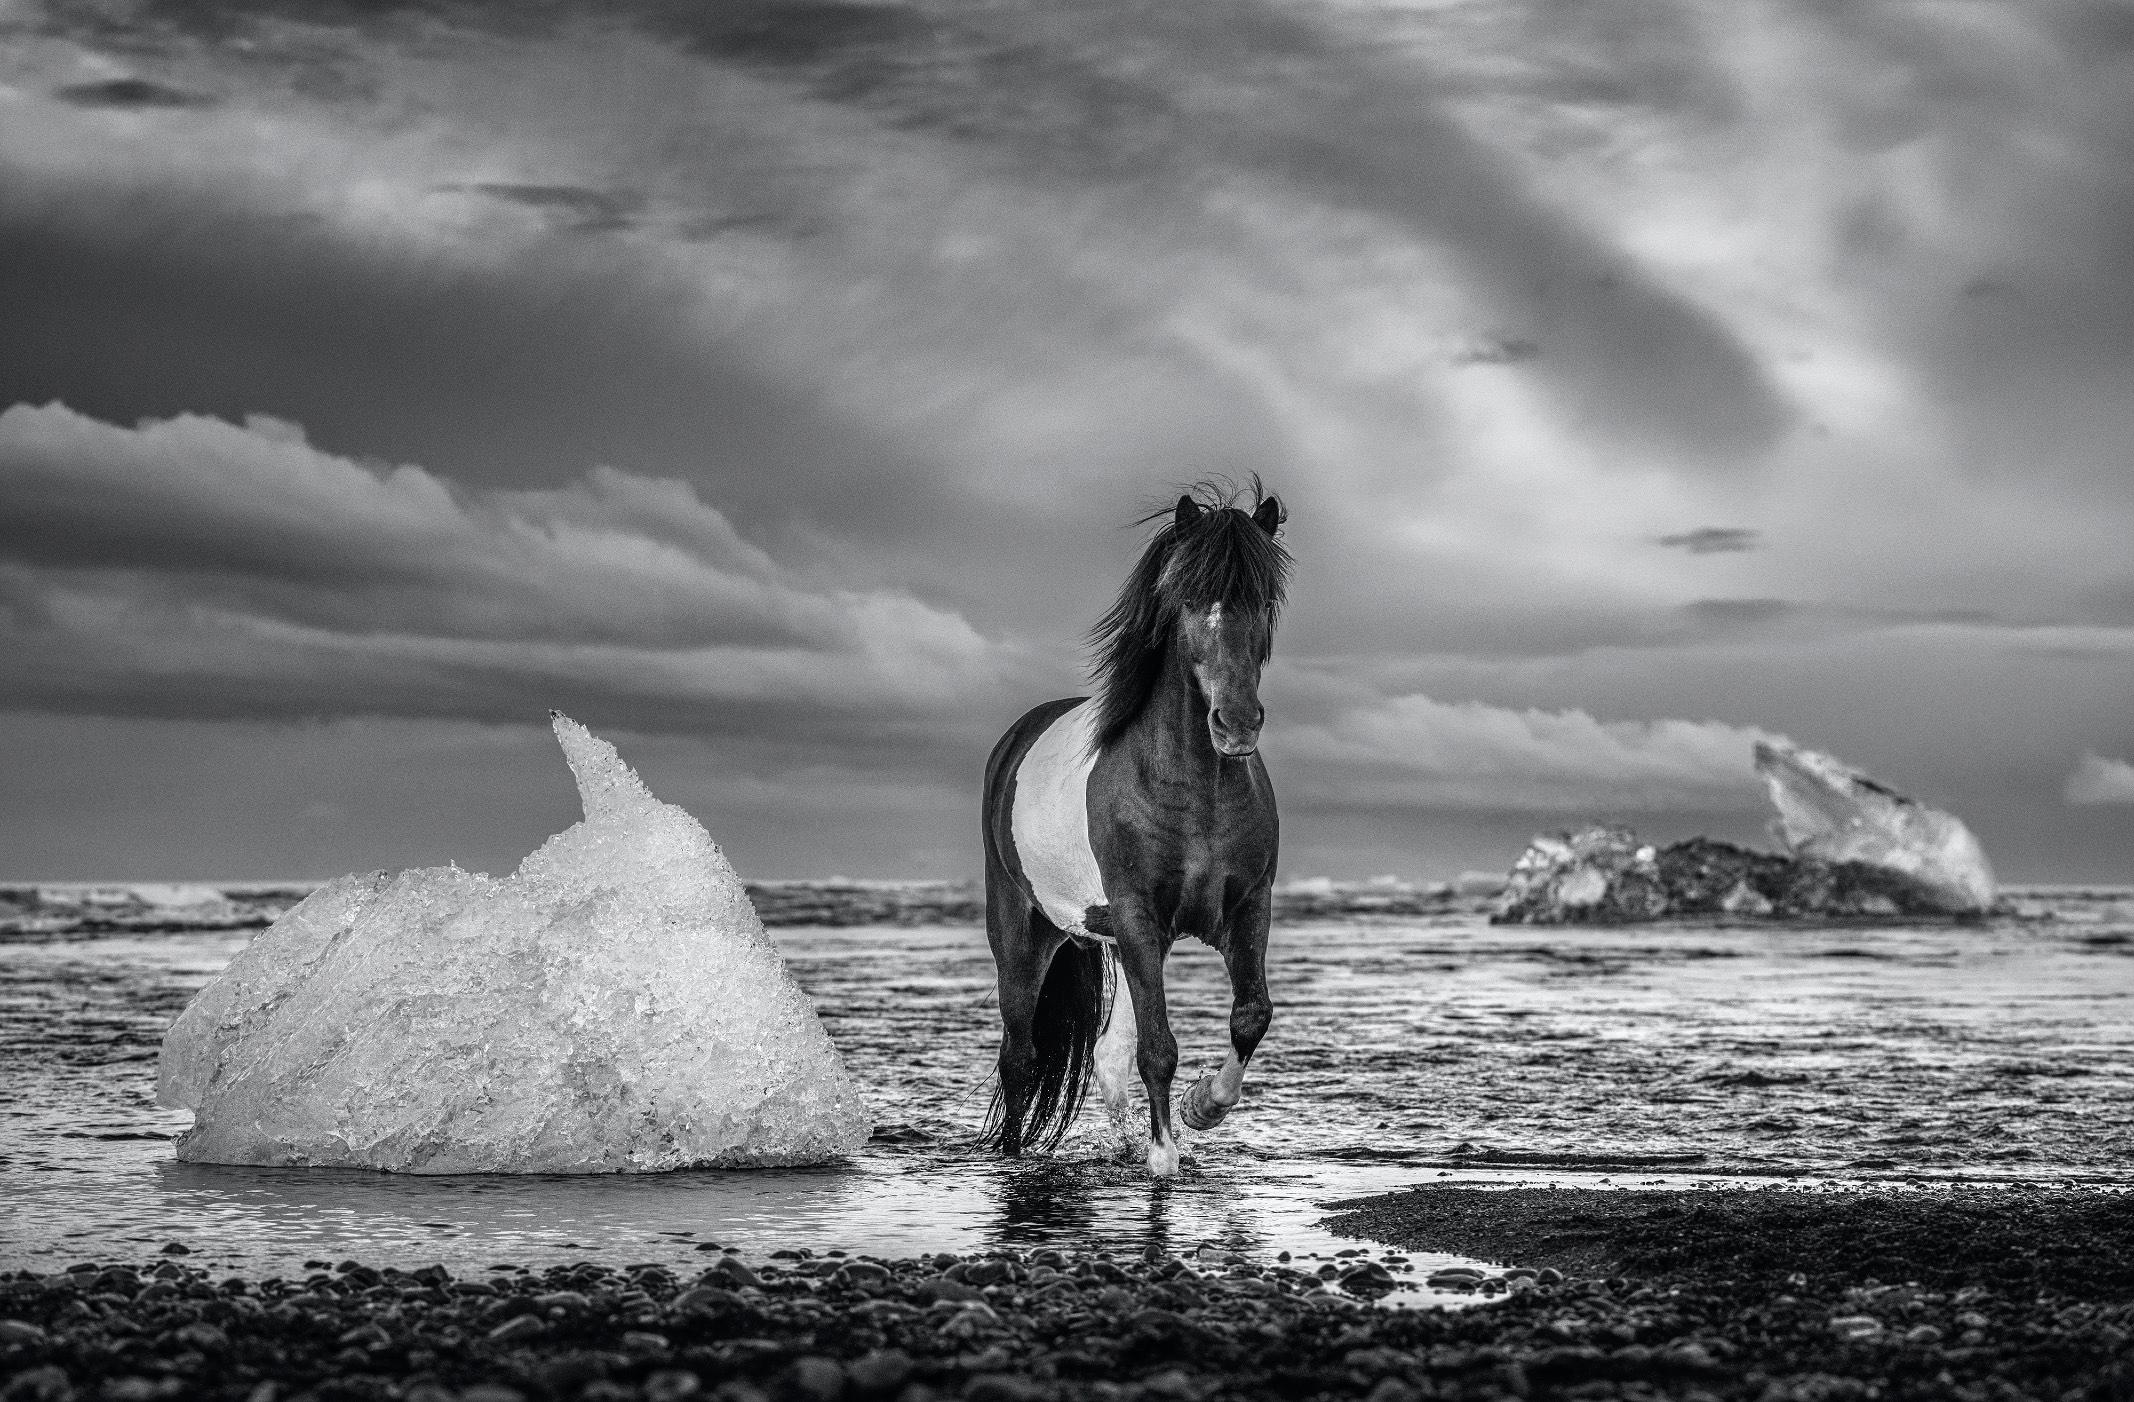 David Yarrow Black and White Photograph - On the Rocks